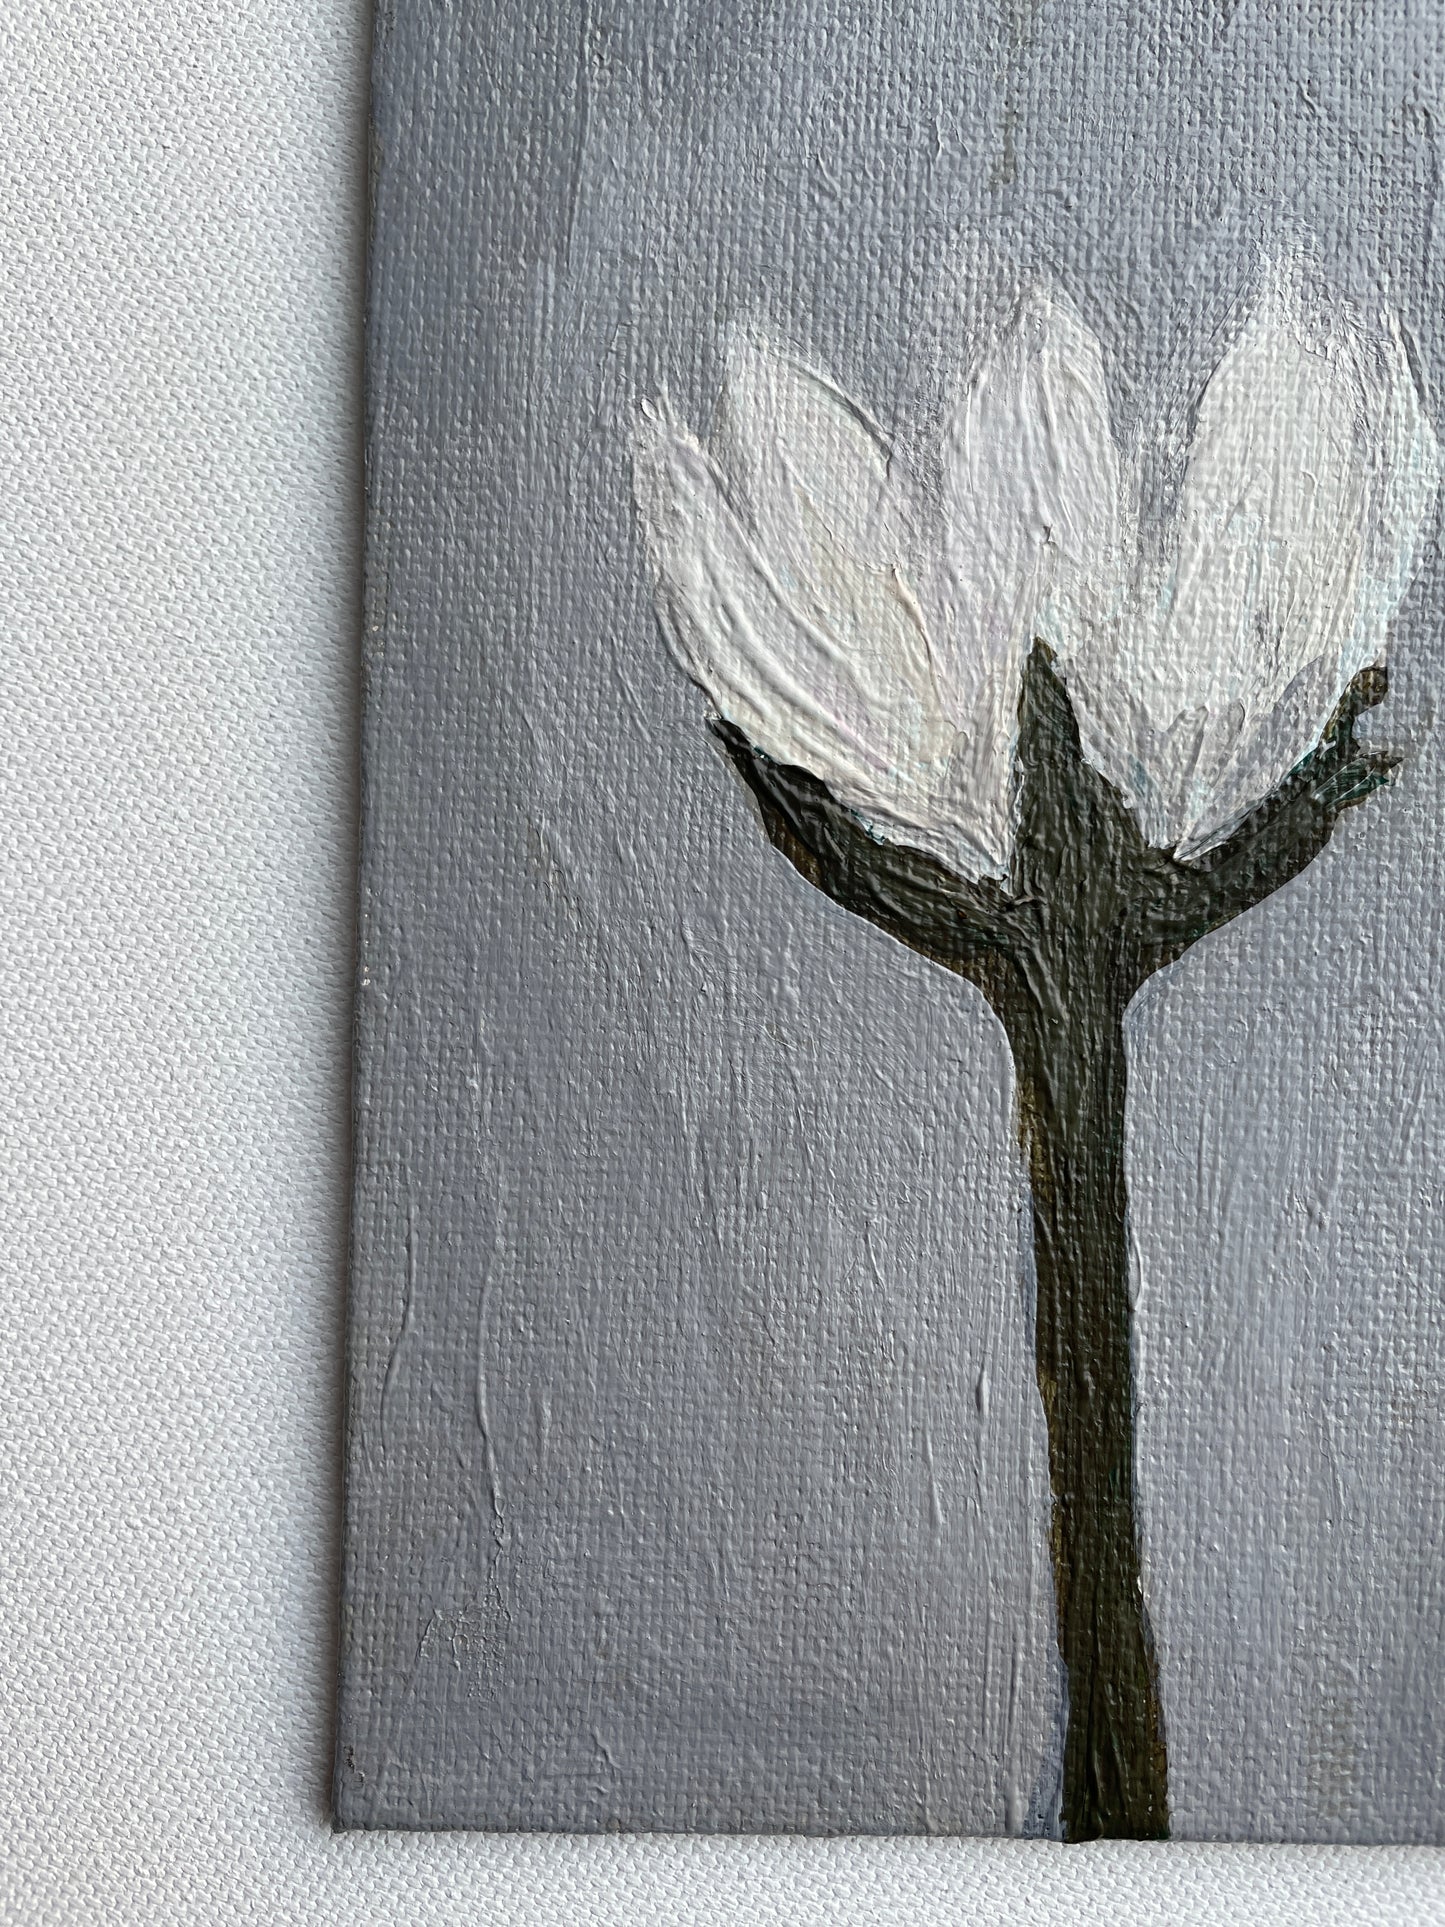 Petite Tulip. Acrylic painting on canvas board.